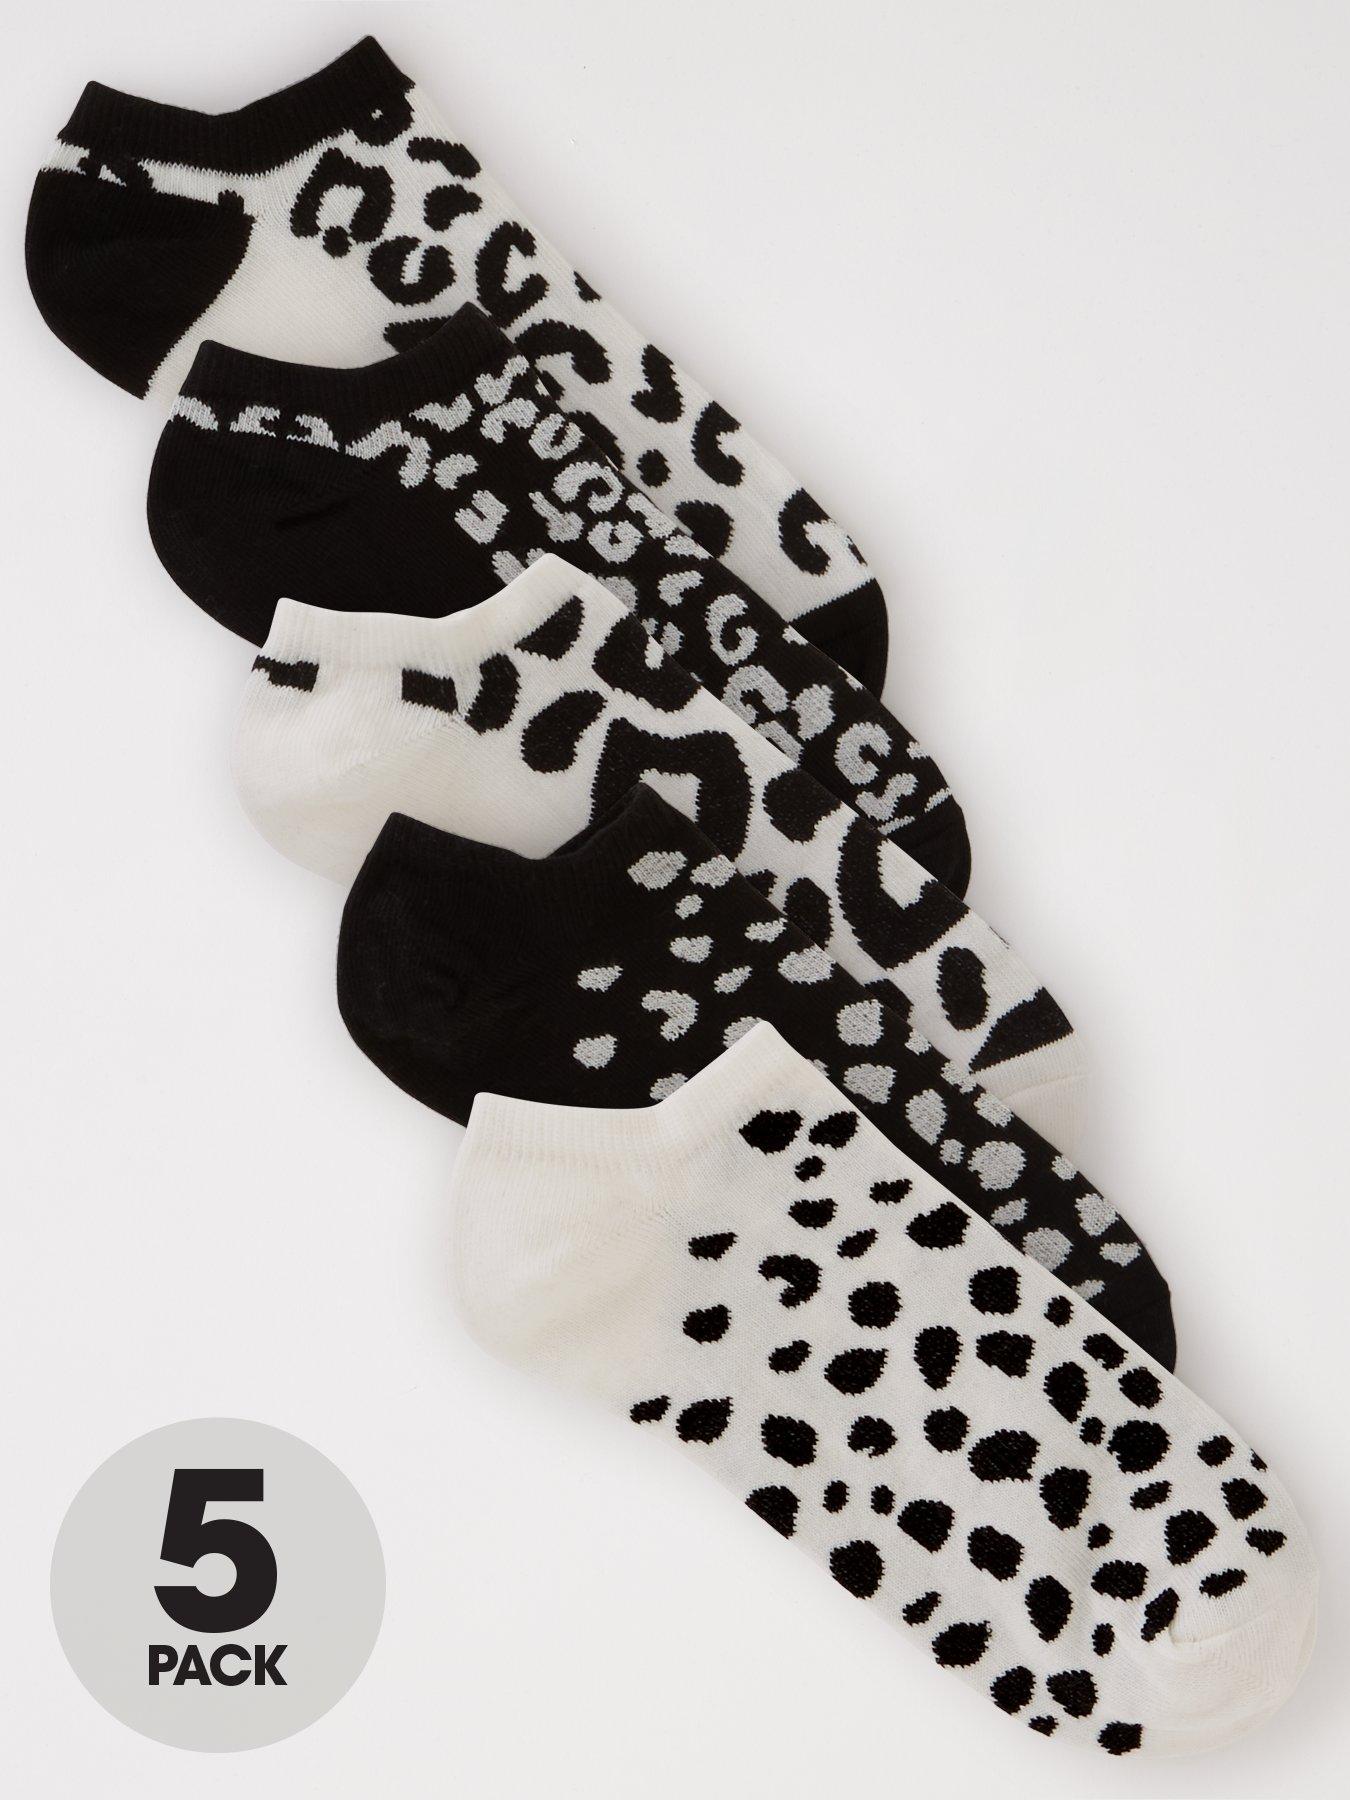 Dot Star Patch Prints on Black Trainer Socks Size: 4-7 3 PACK